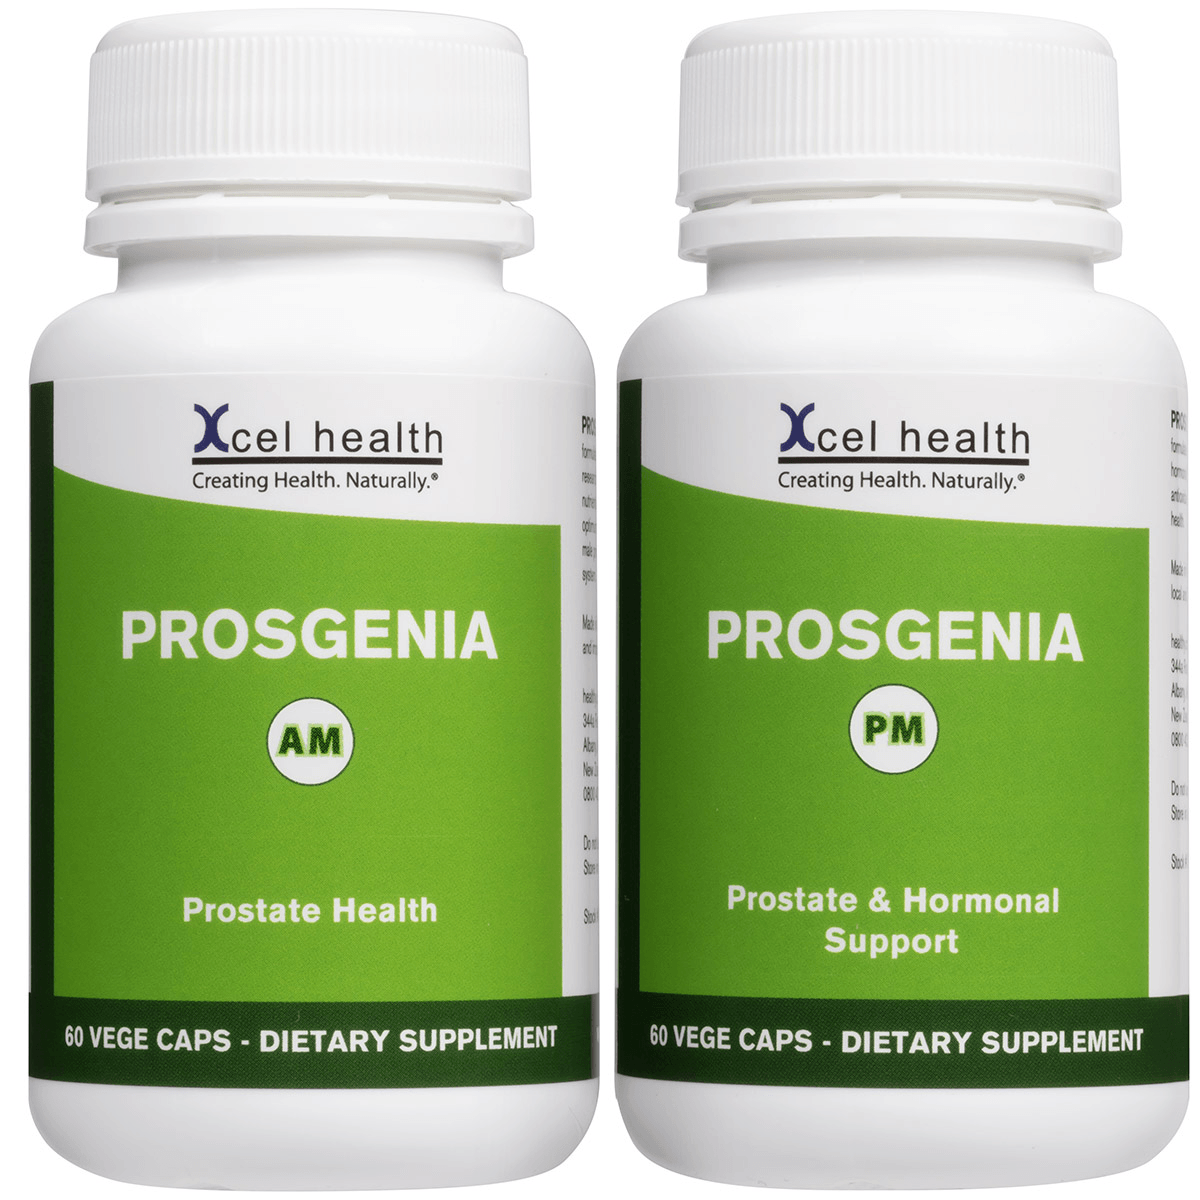 Xcel Health Prosgenia AM & PM Prostate Support